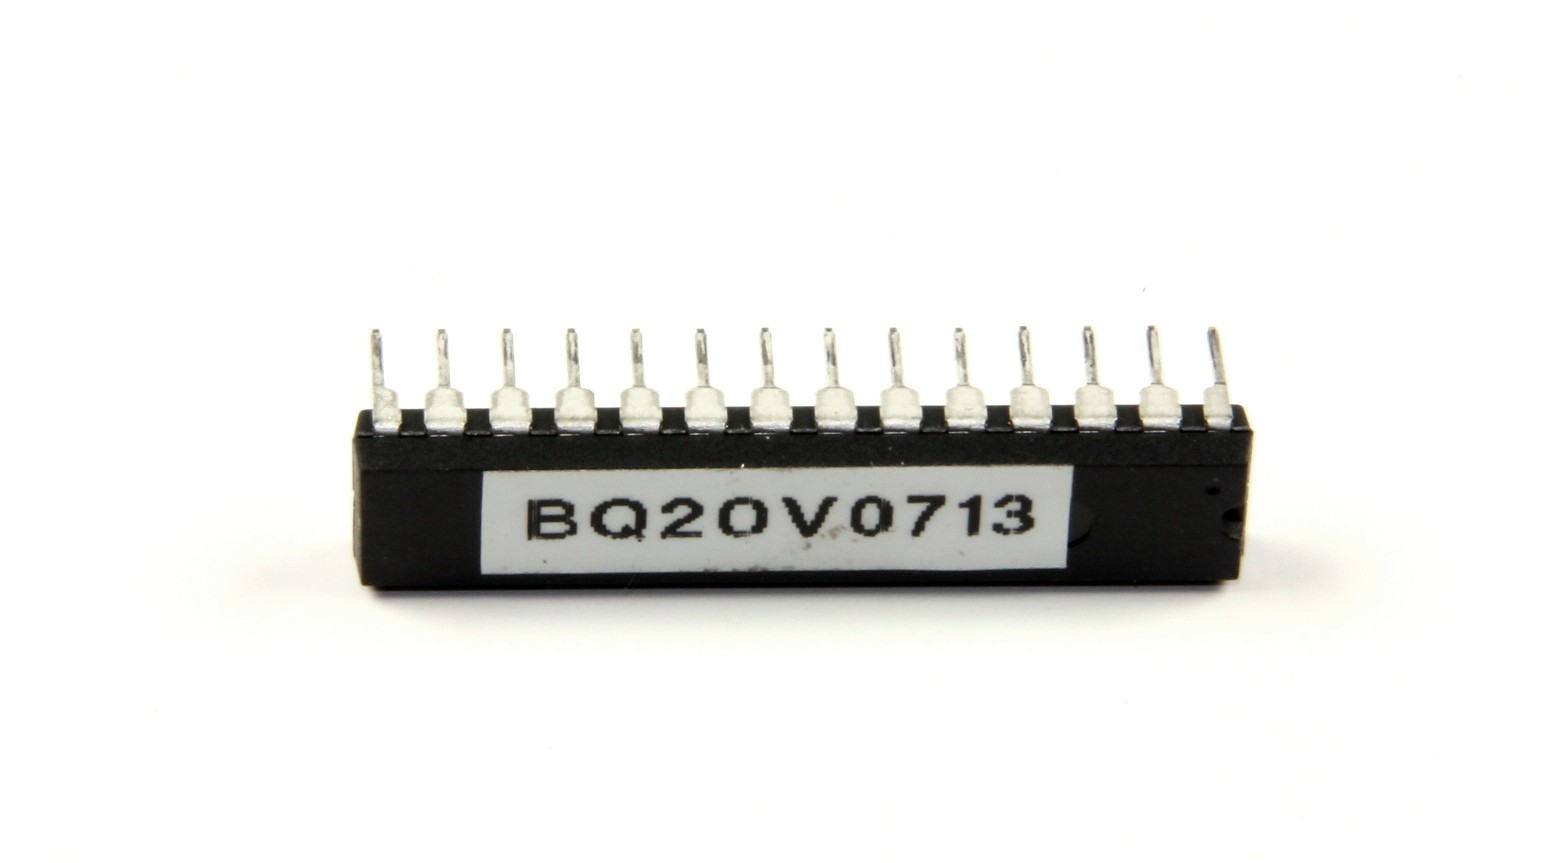 Prosessori v0713, ketjuveto BM+20 / BQ20